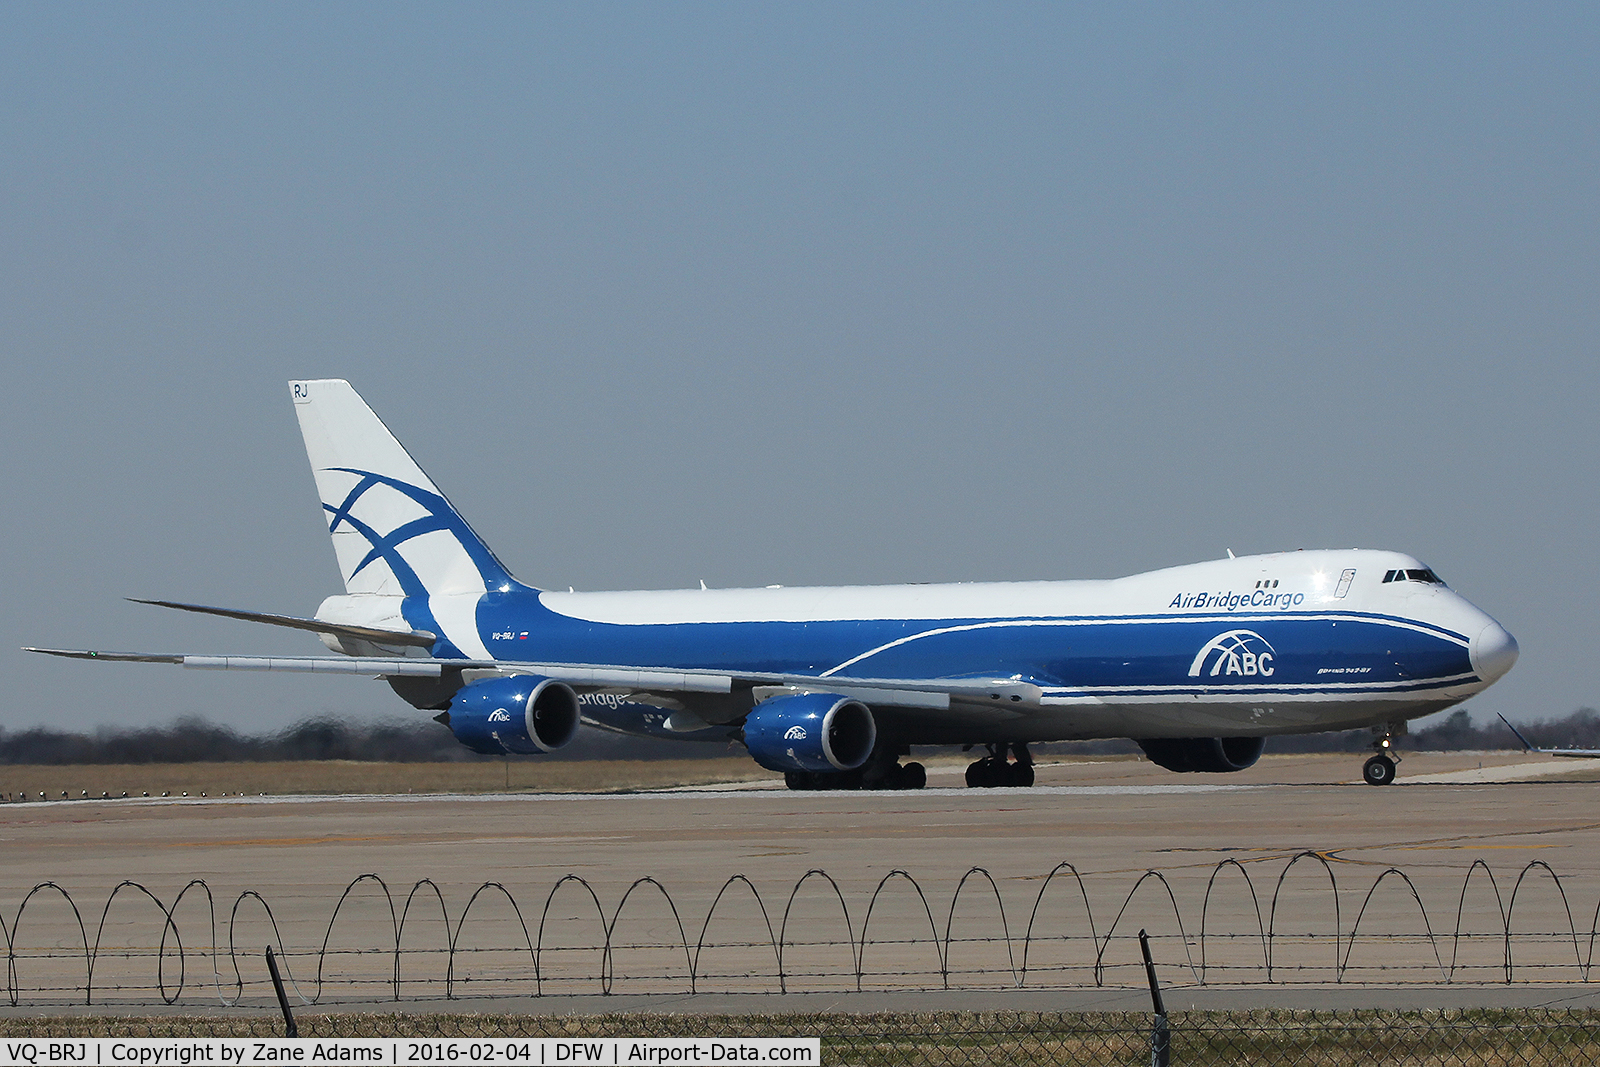 VQ-BRJ, 2013 Boeing 747-8HVF C/N 37670, Air Bridge Cargo at DFW Airport